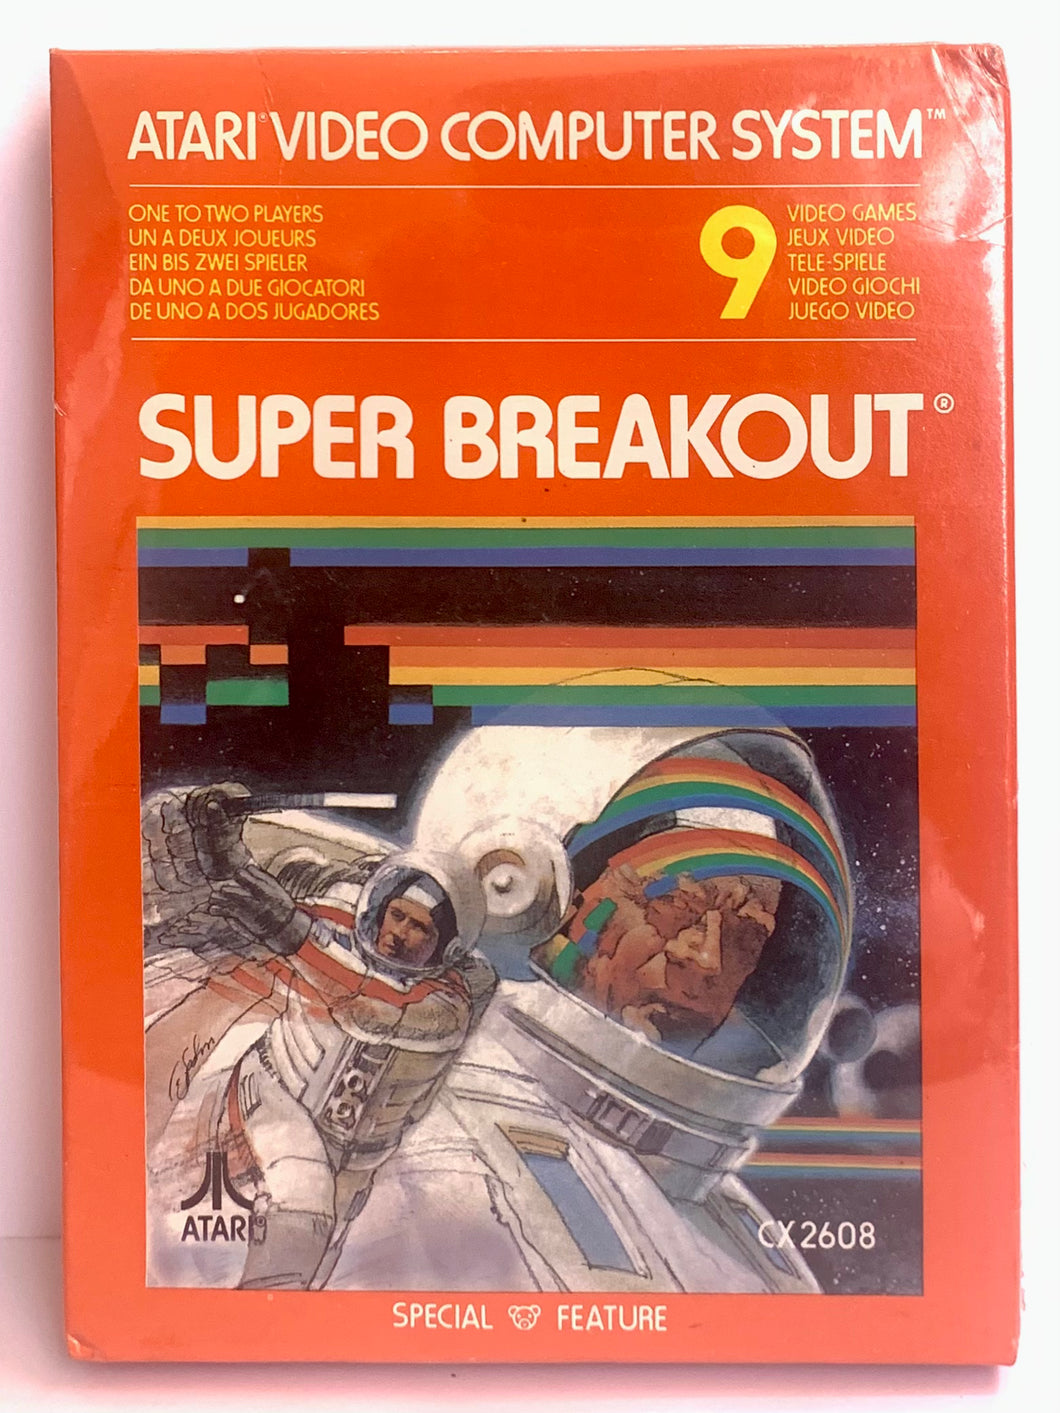 Super Breakout - Atari VCS 2600 - NTSC - Brand New